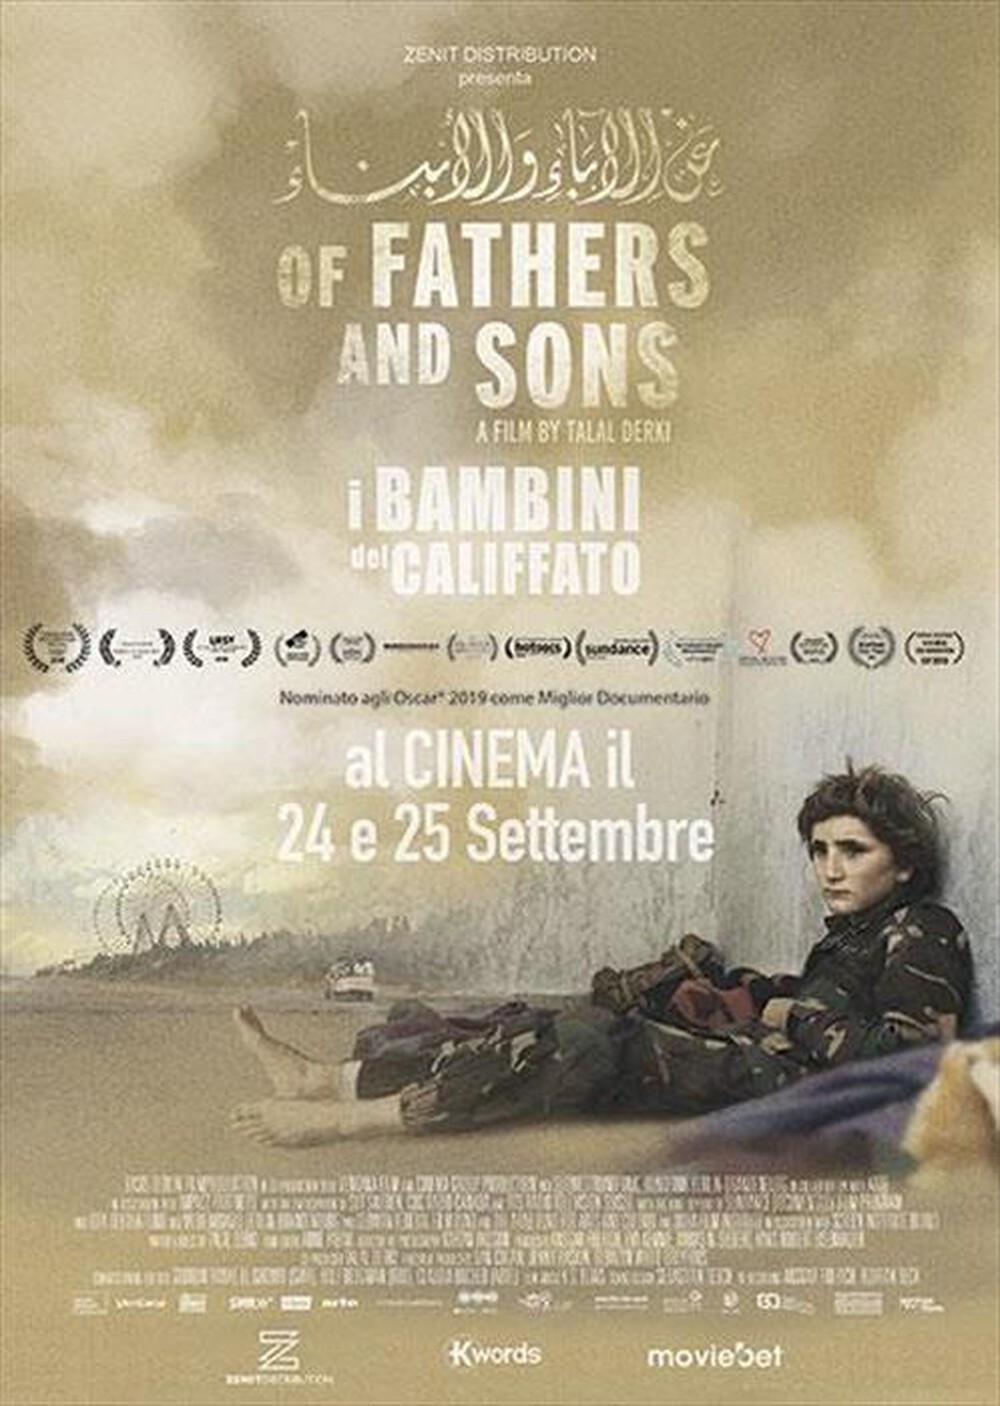 "Zenit Distribution - Of Fathers And Sons - I Bambini Del Califfato"